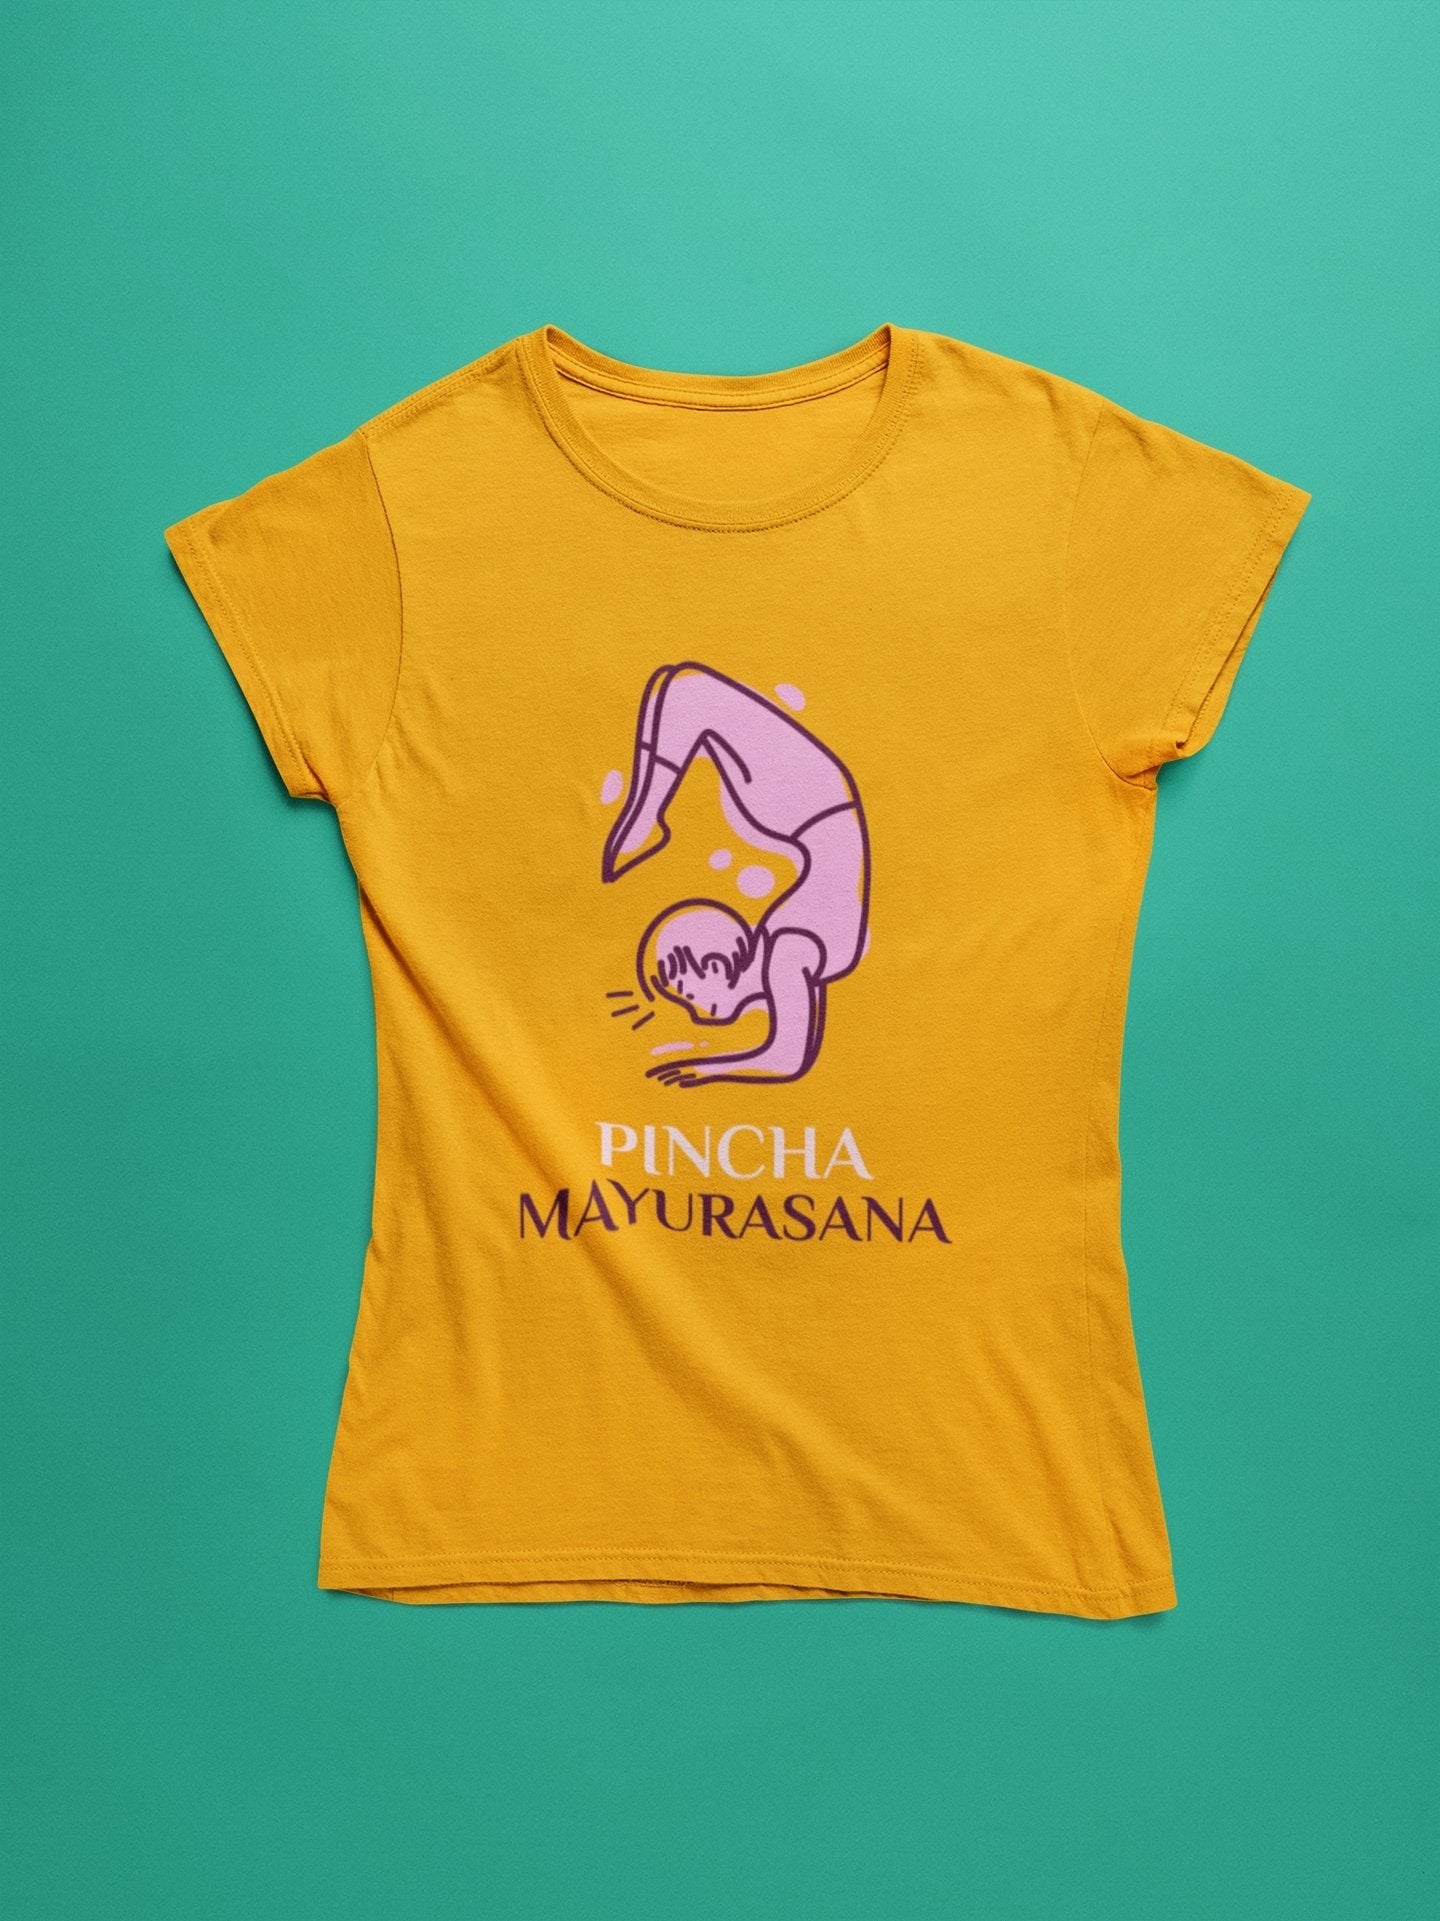 thelegalgang,Pincha Mayurasana design Yoga T shirt for Women,WOMEN.